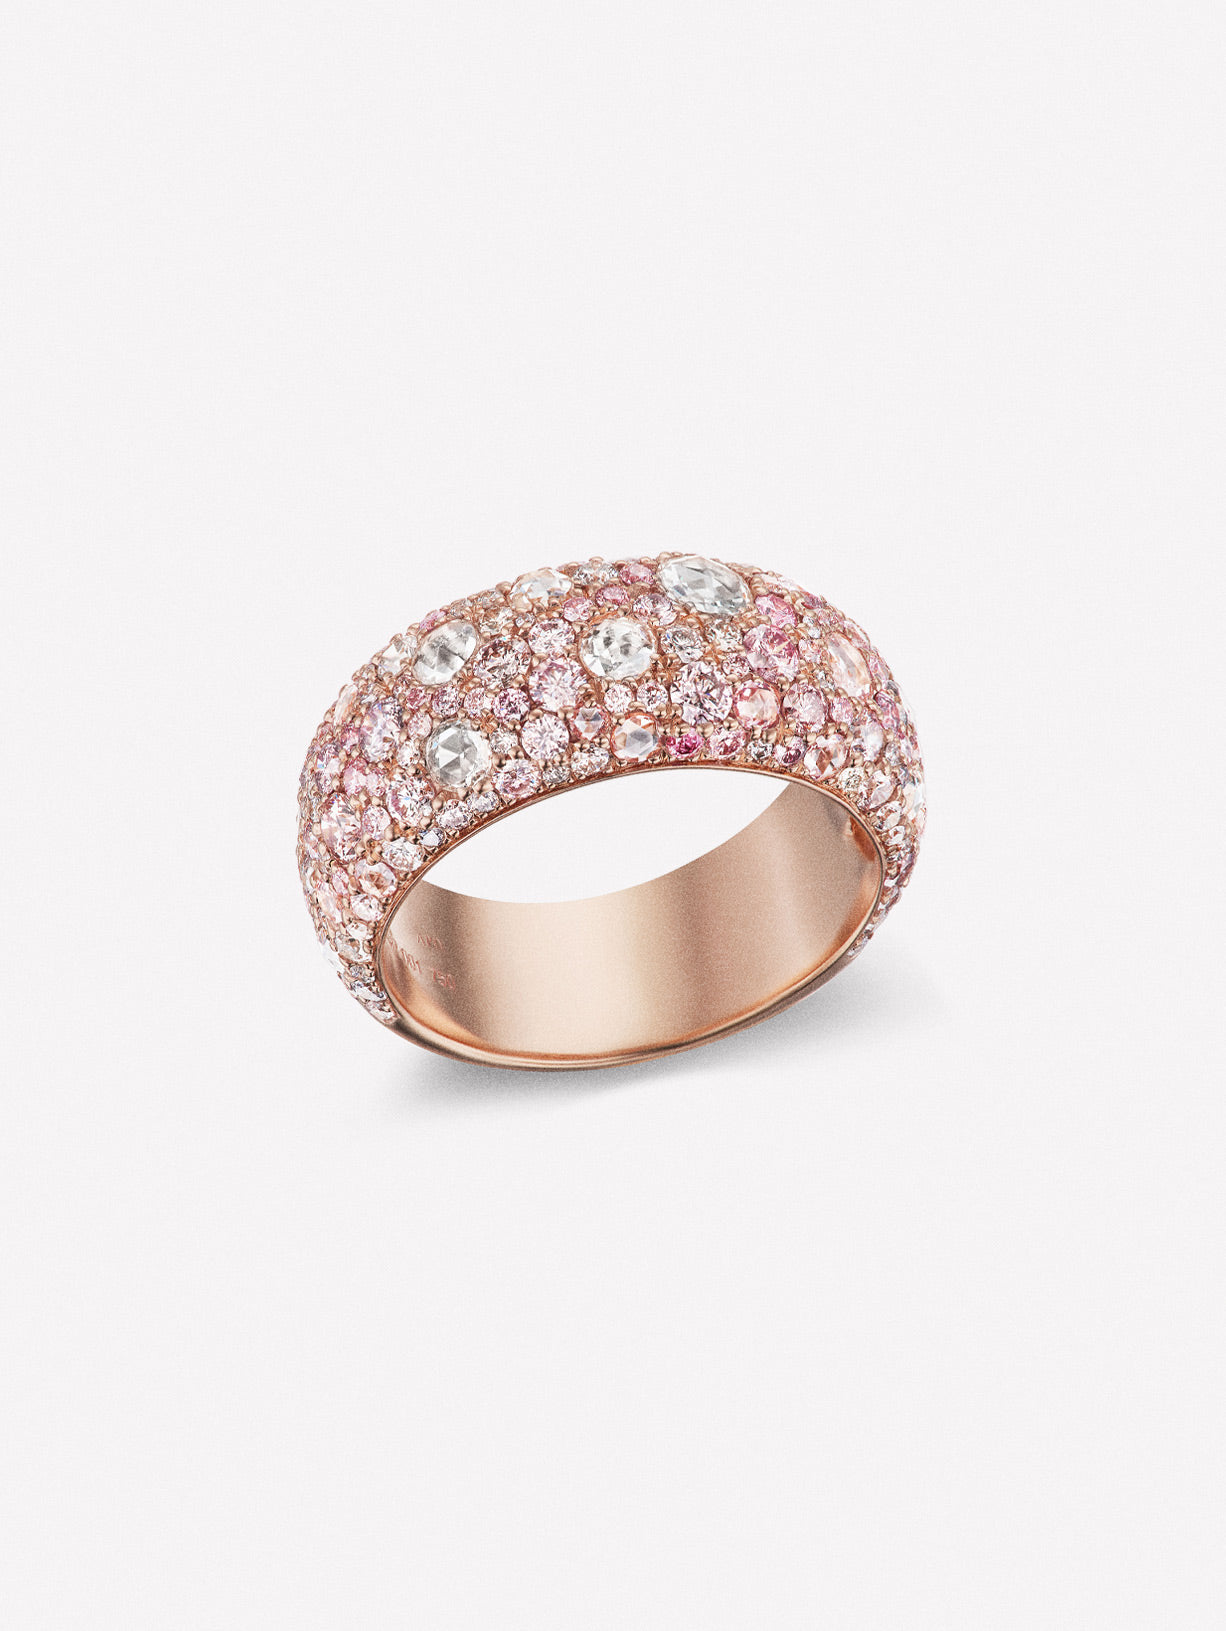 The Argyle Pink™ Diamond Dome Pave Ring - Pink Diamonds, J FINE - J Fine, ring - Pink Diamond Jewelry, argyle-pink™-diamond-dome-pave-ring-by-j-fine - Argyle Pink Diamonds